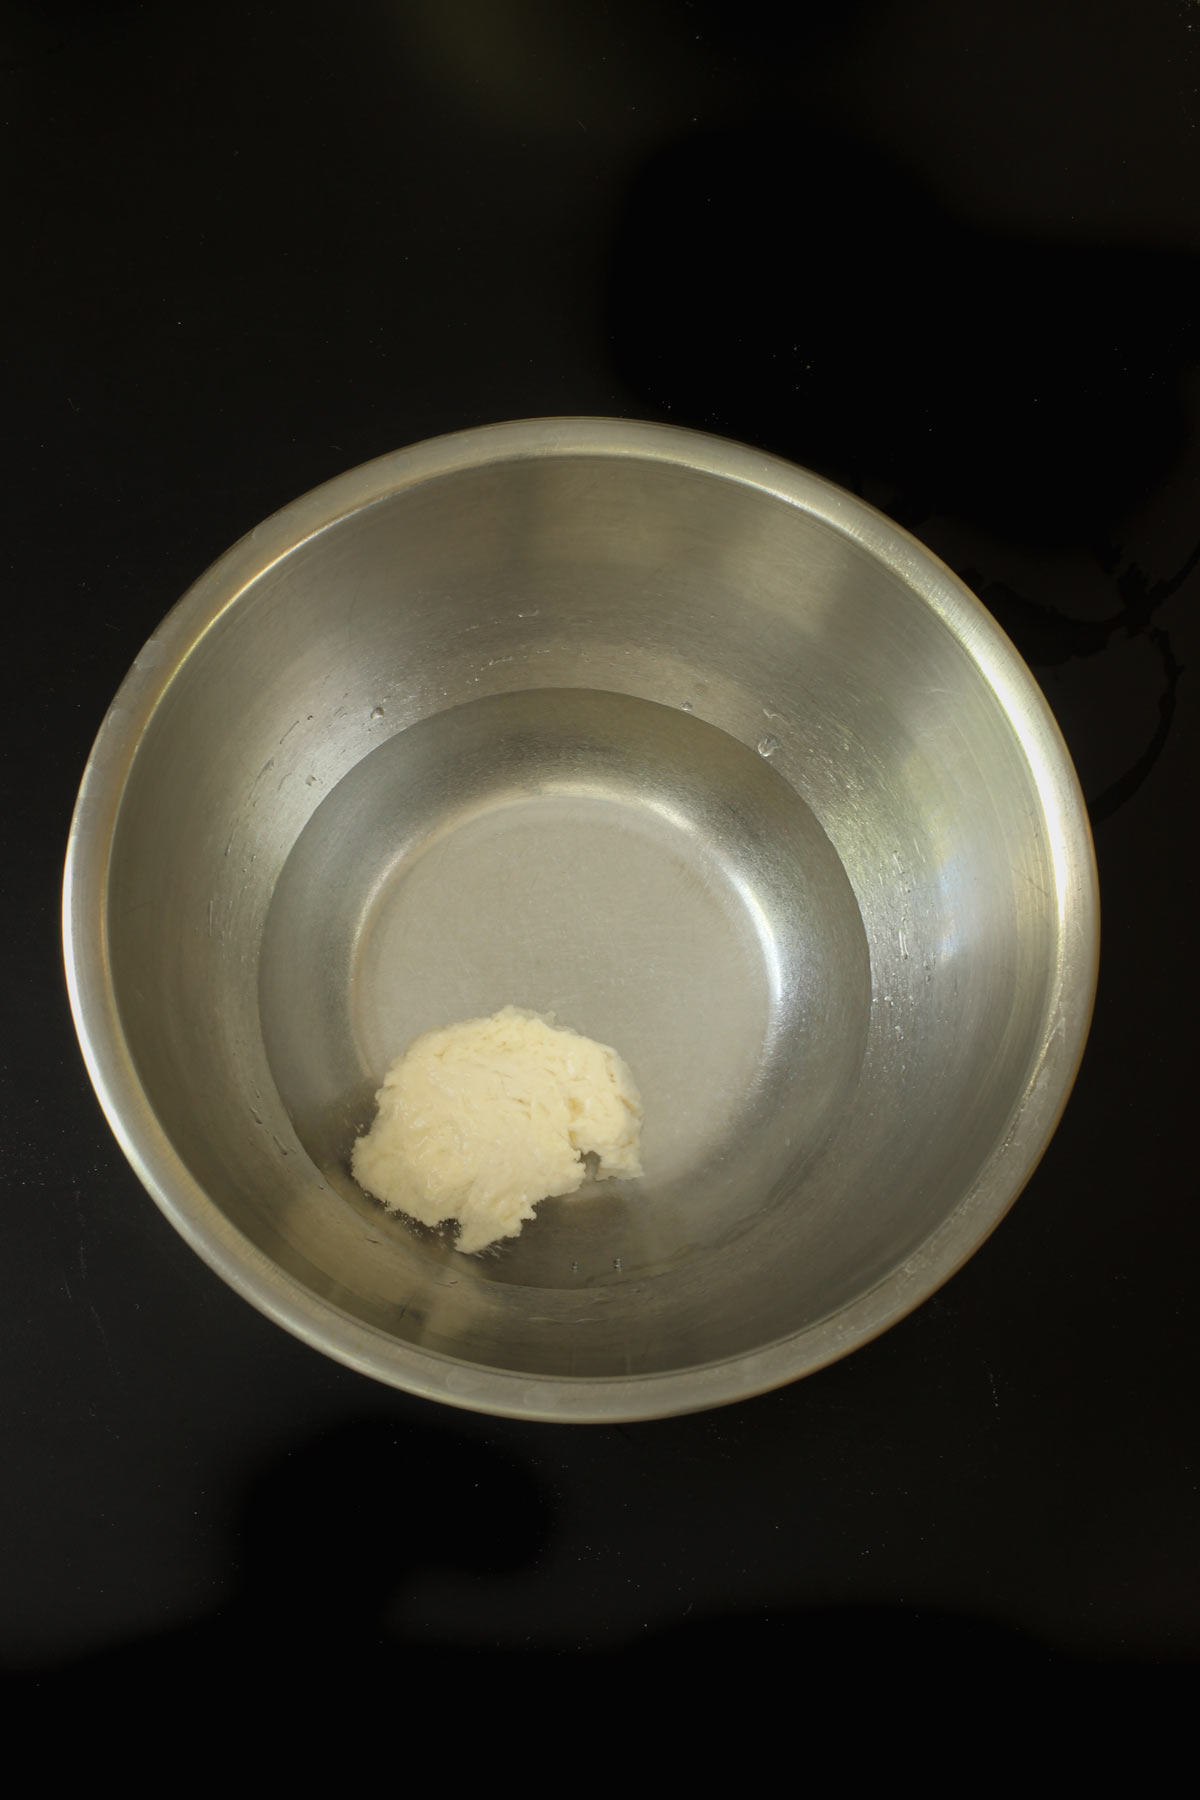 sourdough starter floating in bowl of water.